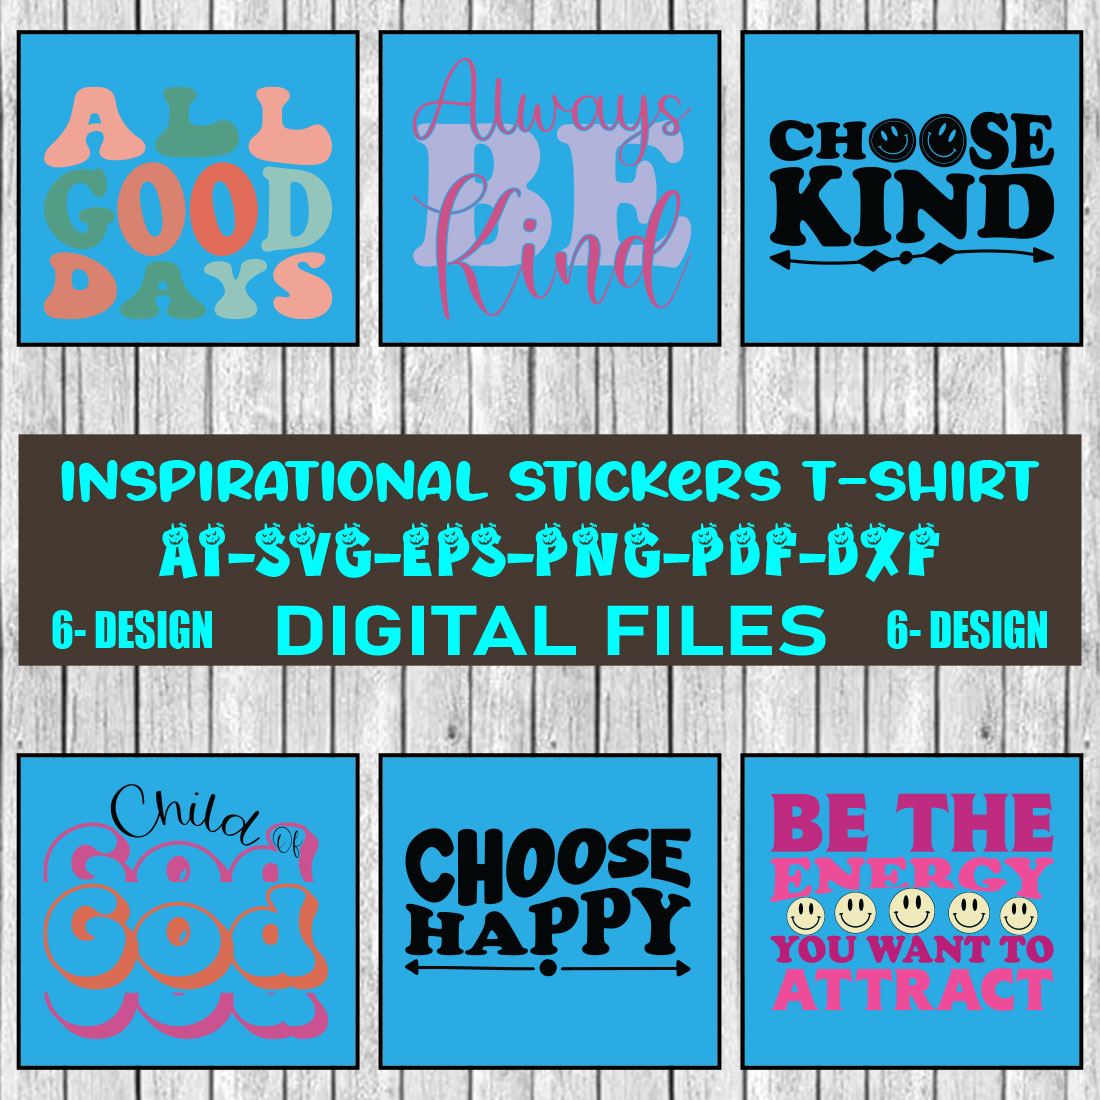 Inspirational stickers SVG Design bundle Vol-03 cover image.